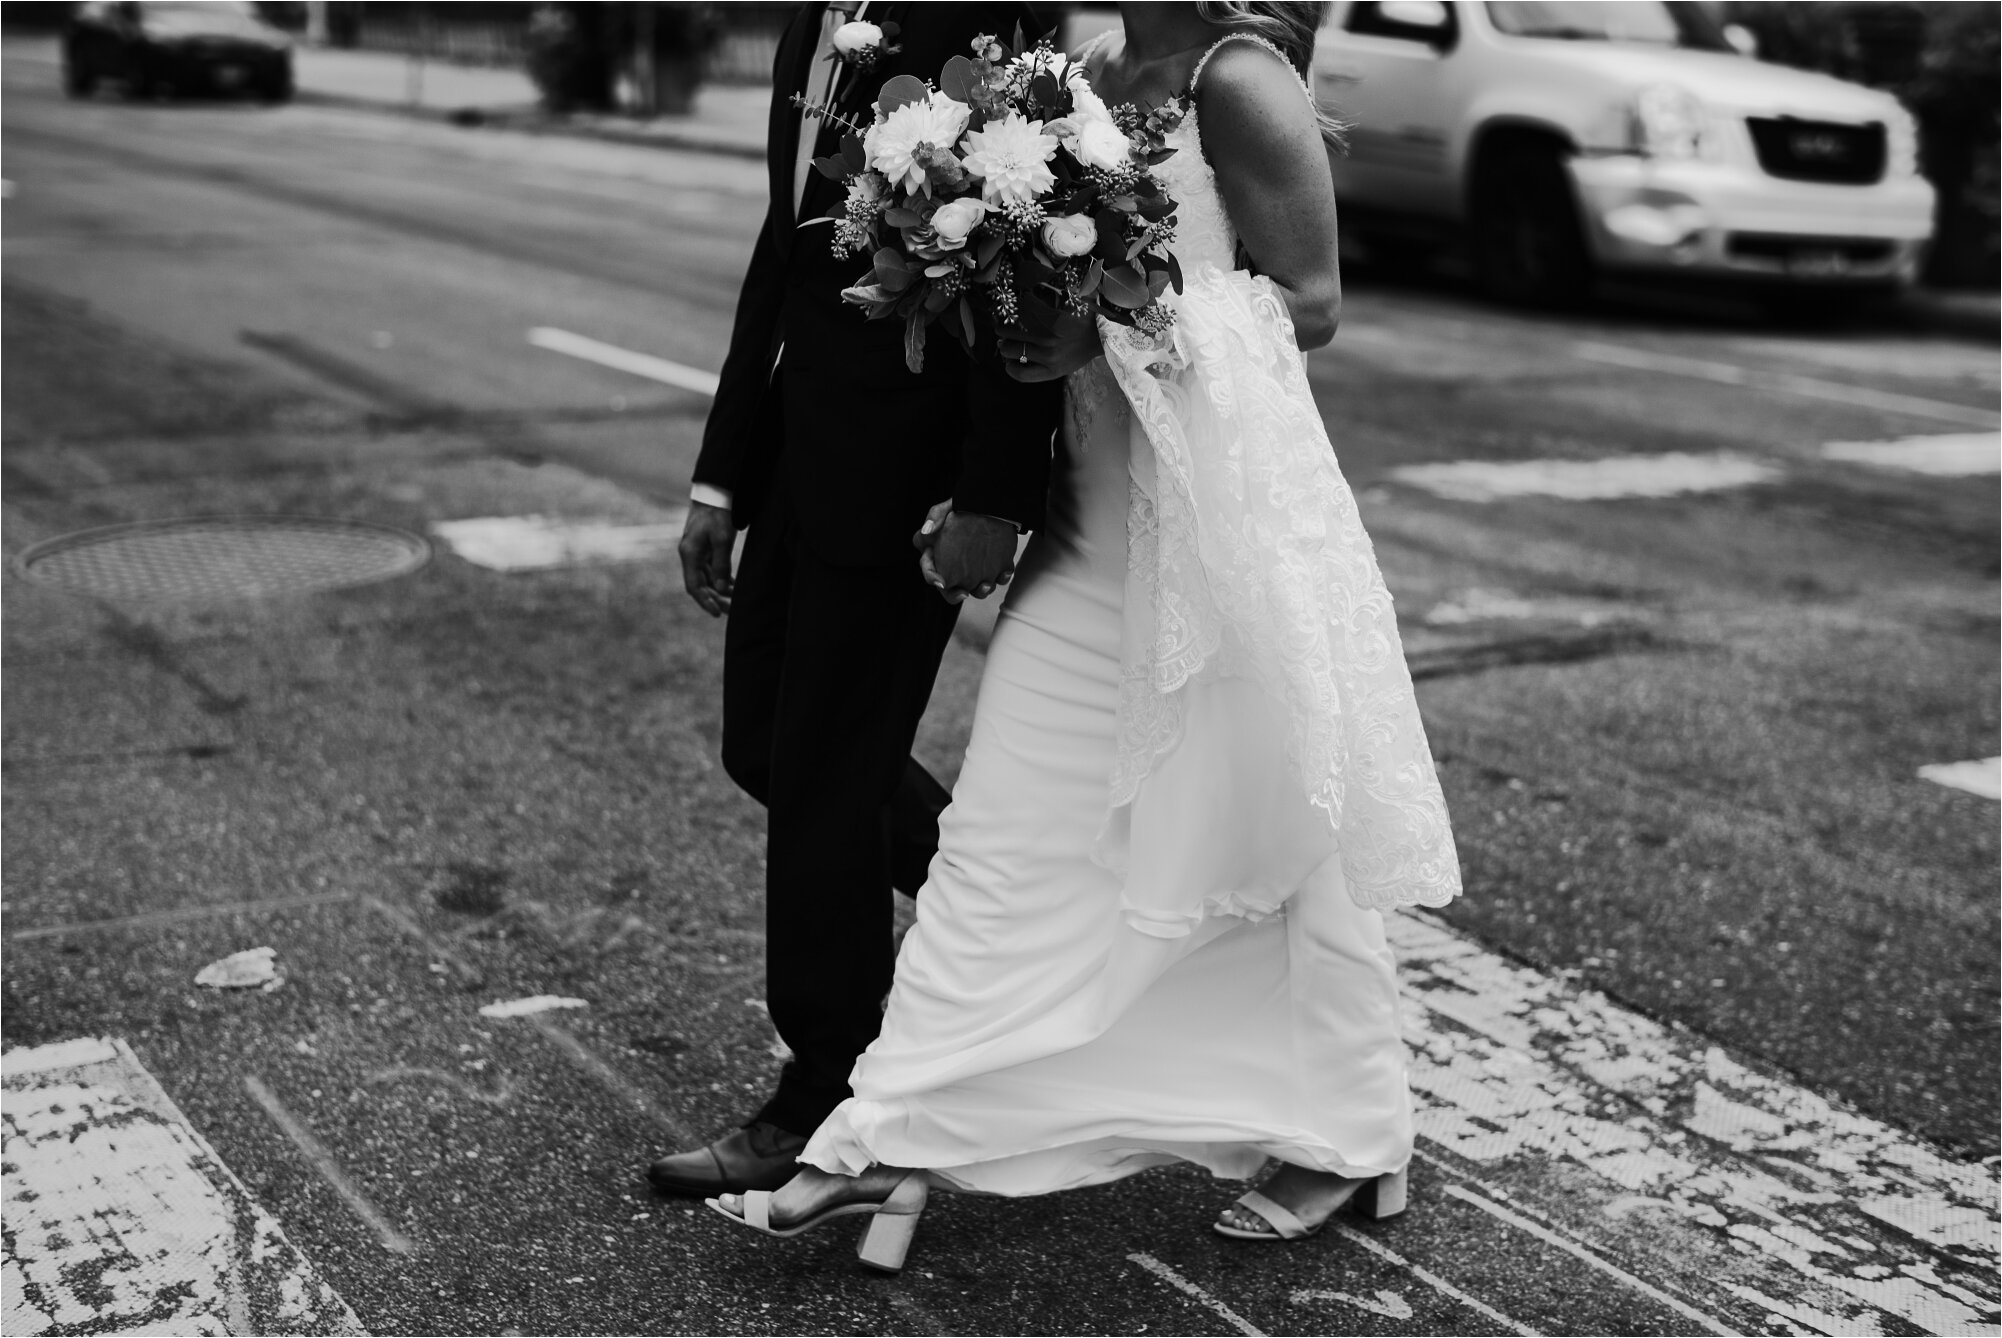  bride groom black and white photos wedding walking crosswalk urban city life photo 